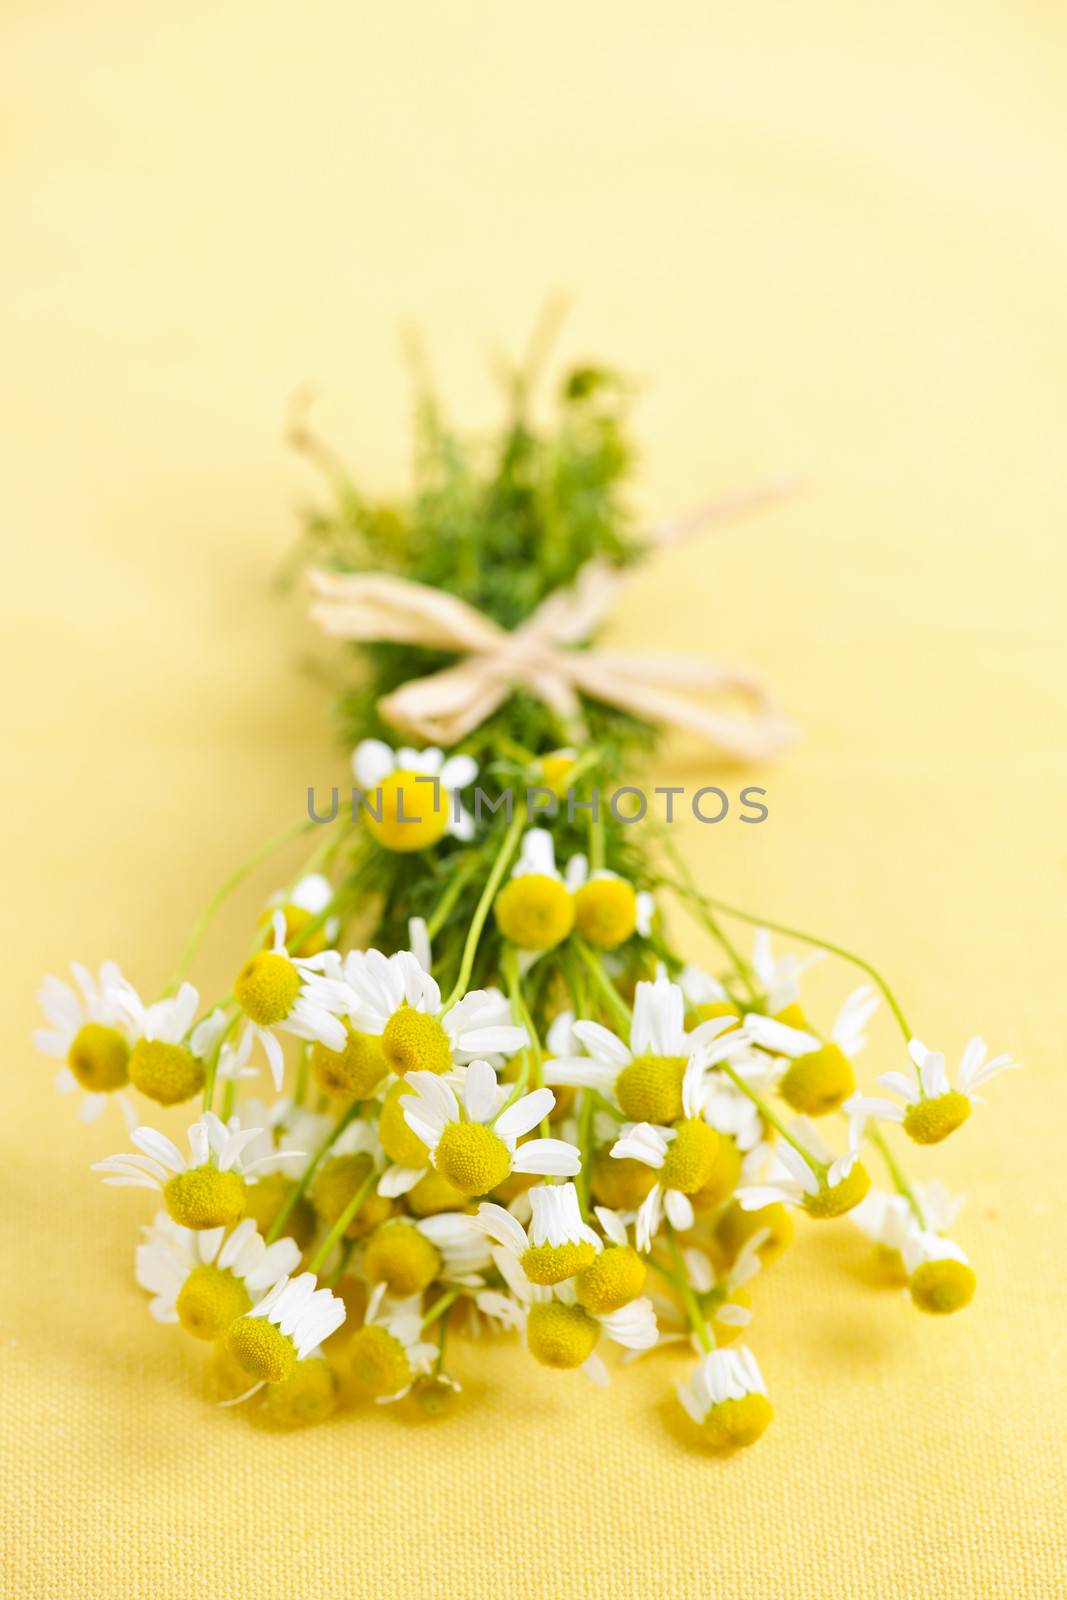 Chamomile flowers by elenathewise